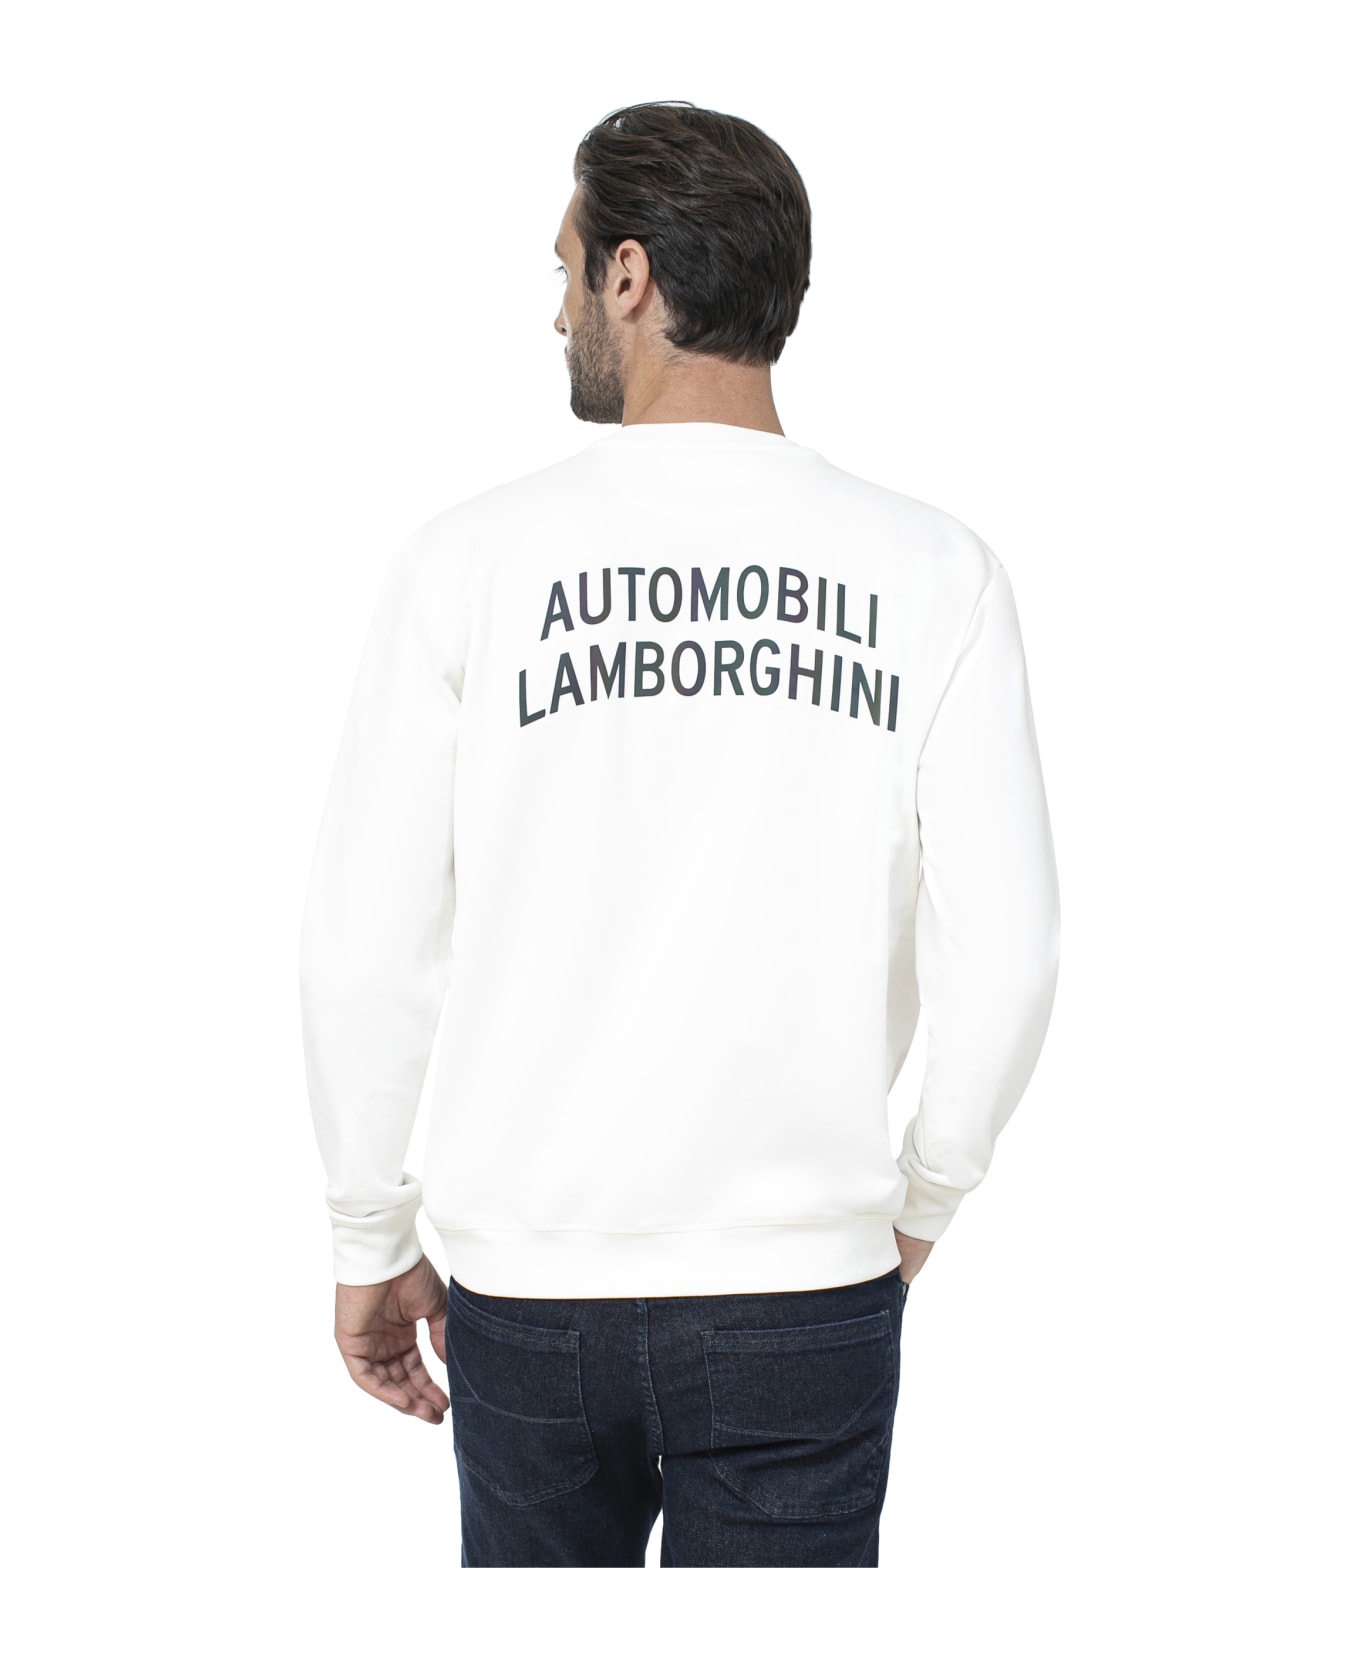 Automobili Lamborghini Sweatshirts 9015160 Regular Felpa 315 Gr - 11-0601 Nike Crop T-Shirt Pastel